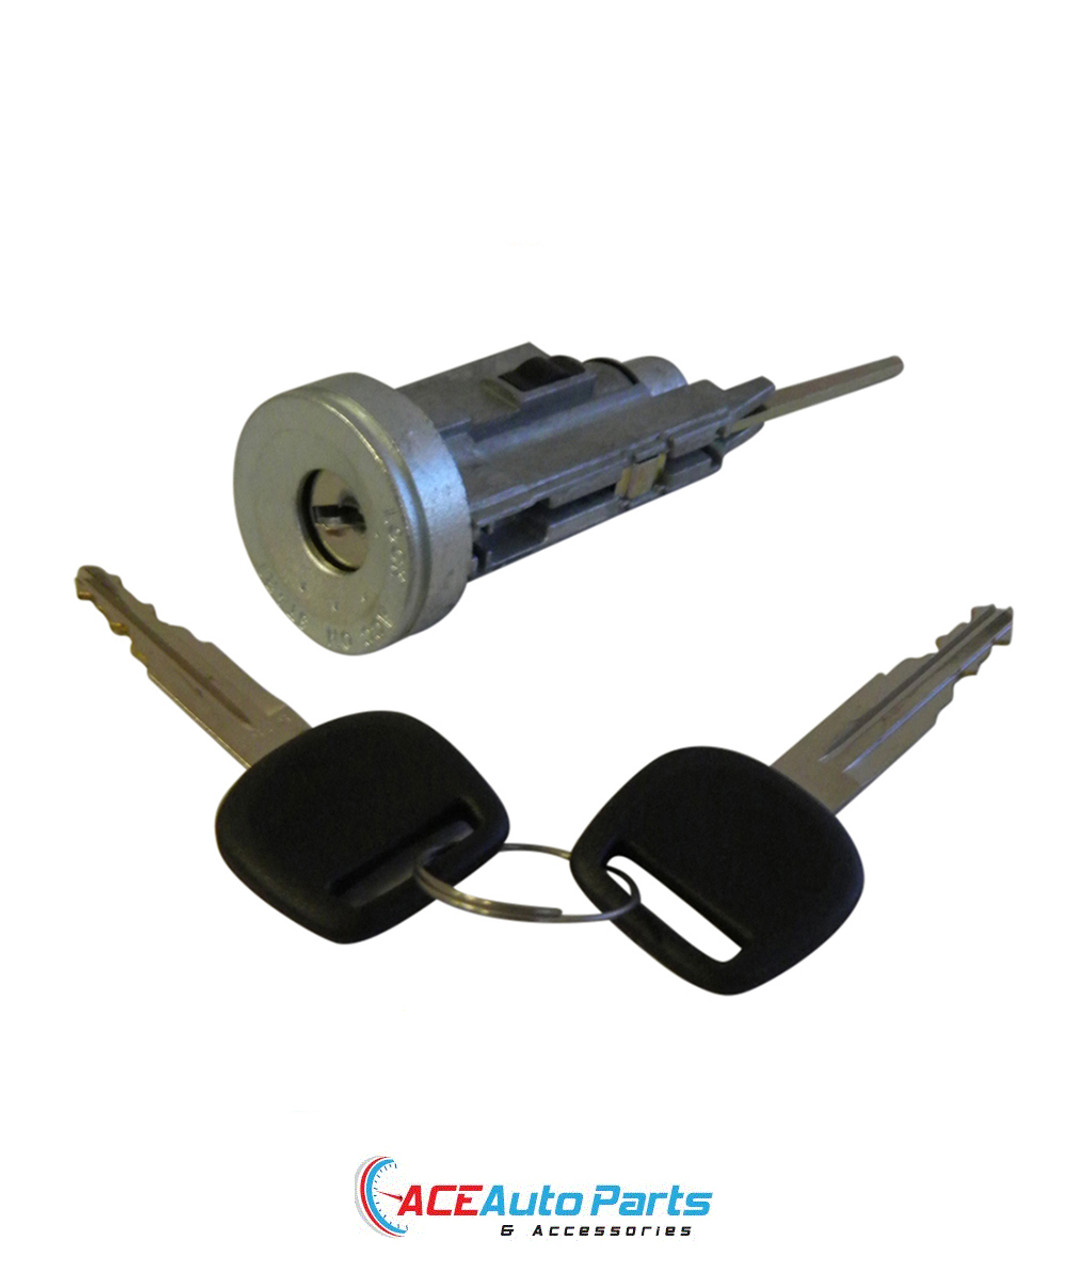 Ignition Barrel + Keys  for Toyota Landcruiser 80 Series 